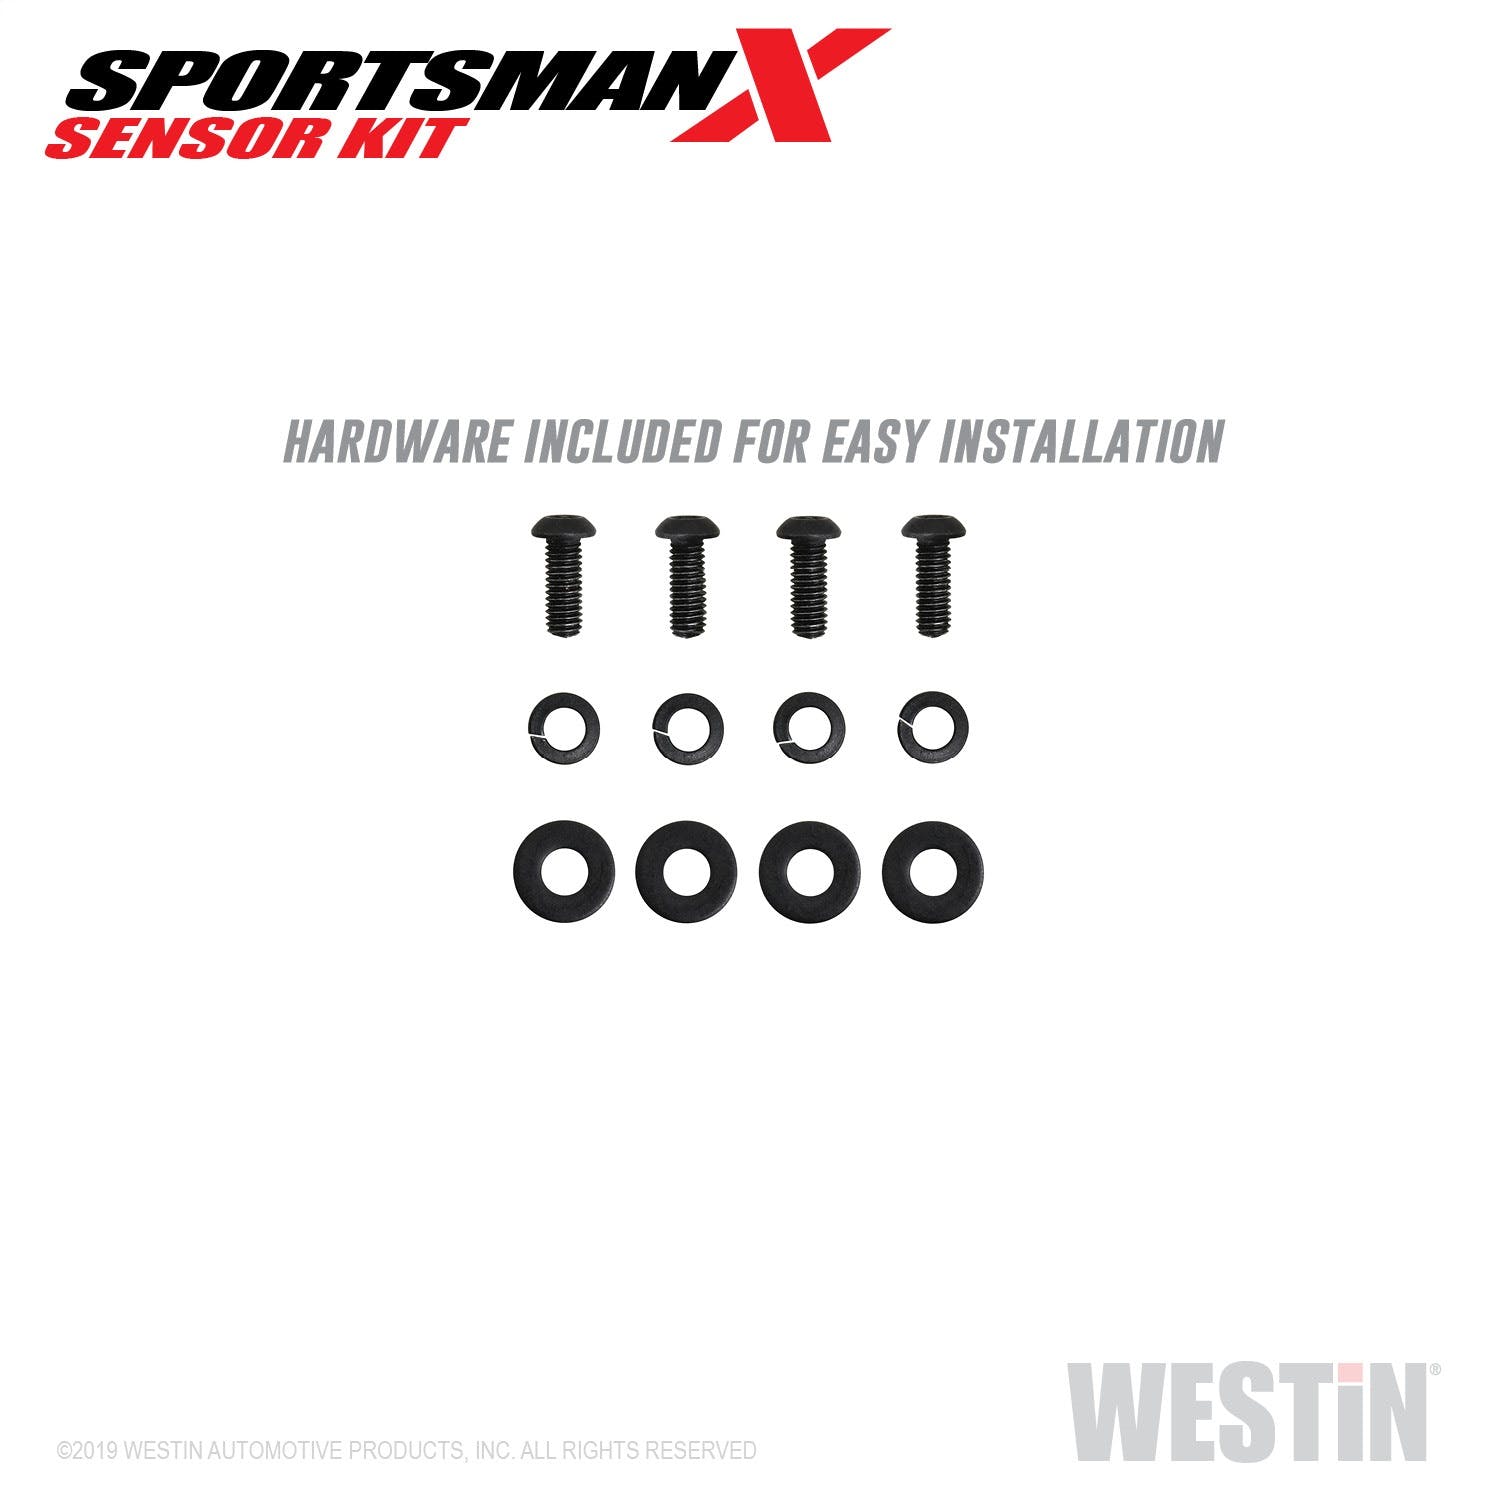 Westin Automotive 40-21015 Sportsman X Sensor Kit Textured Black